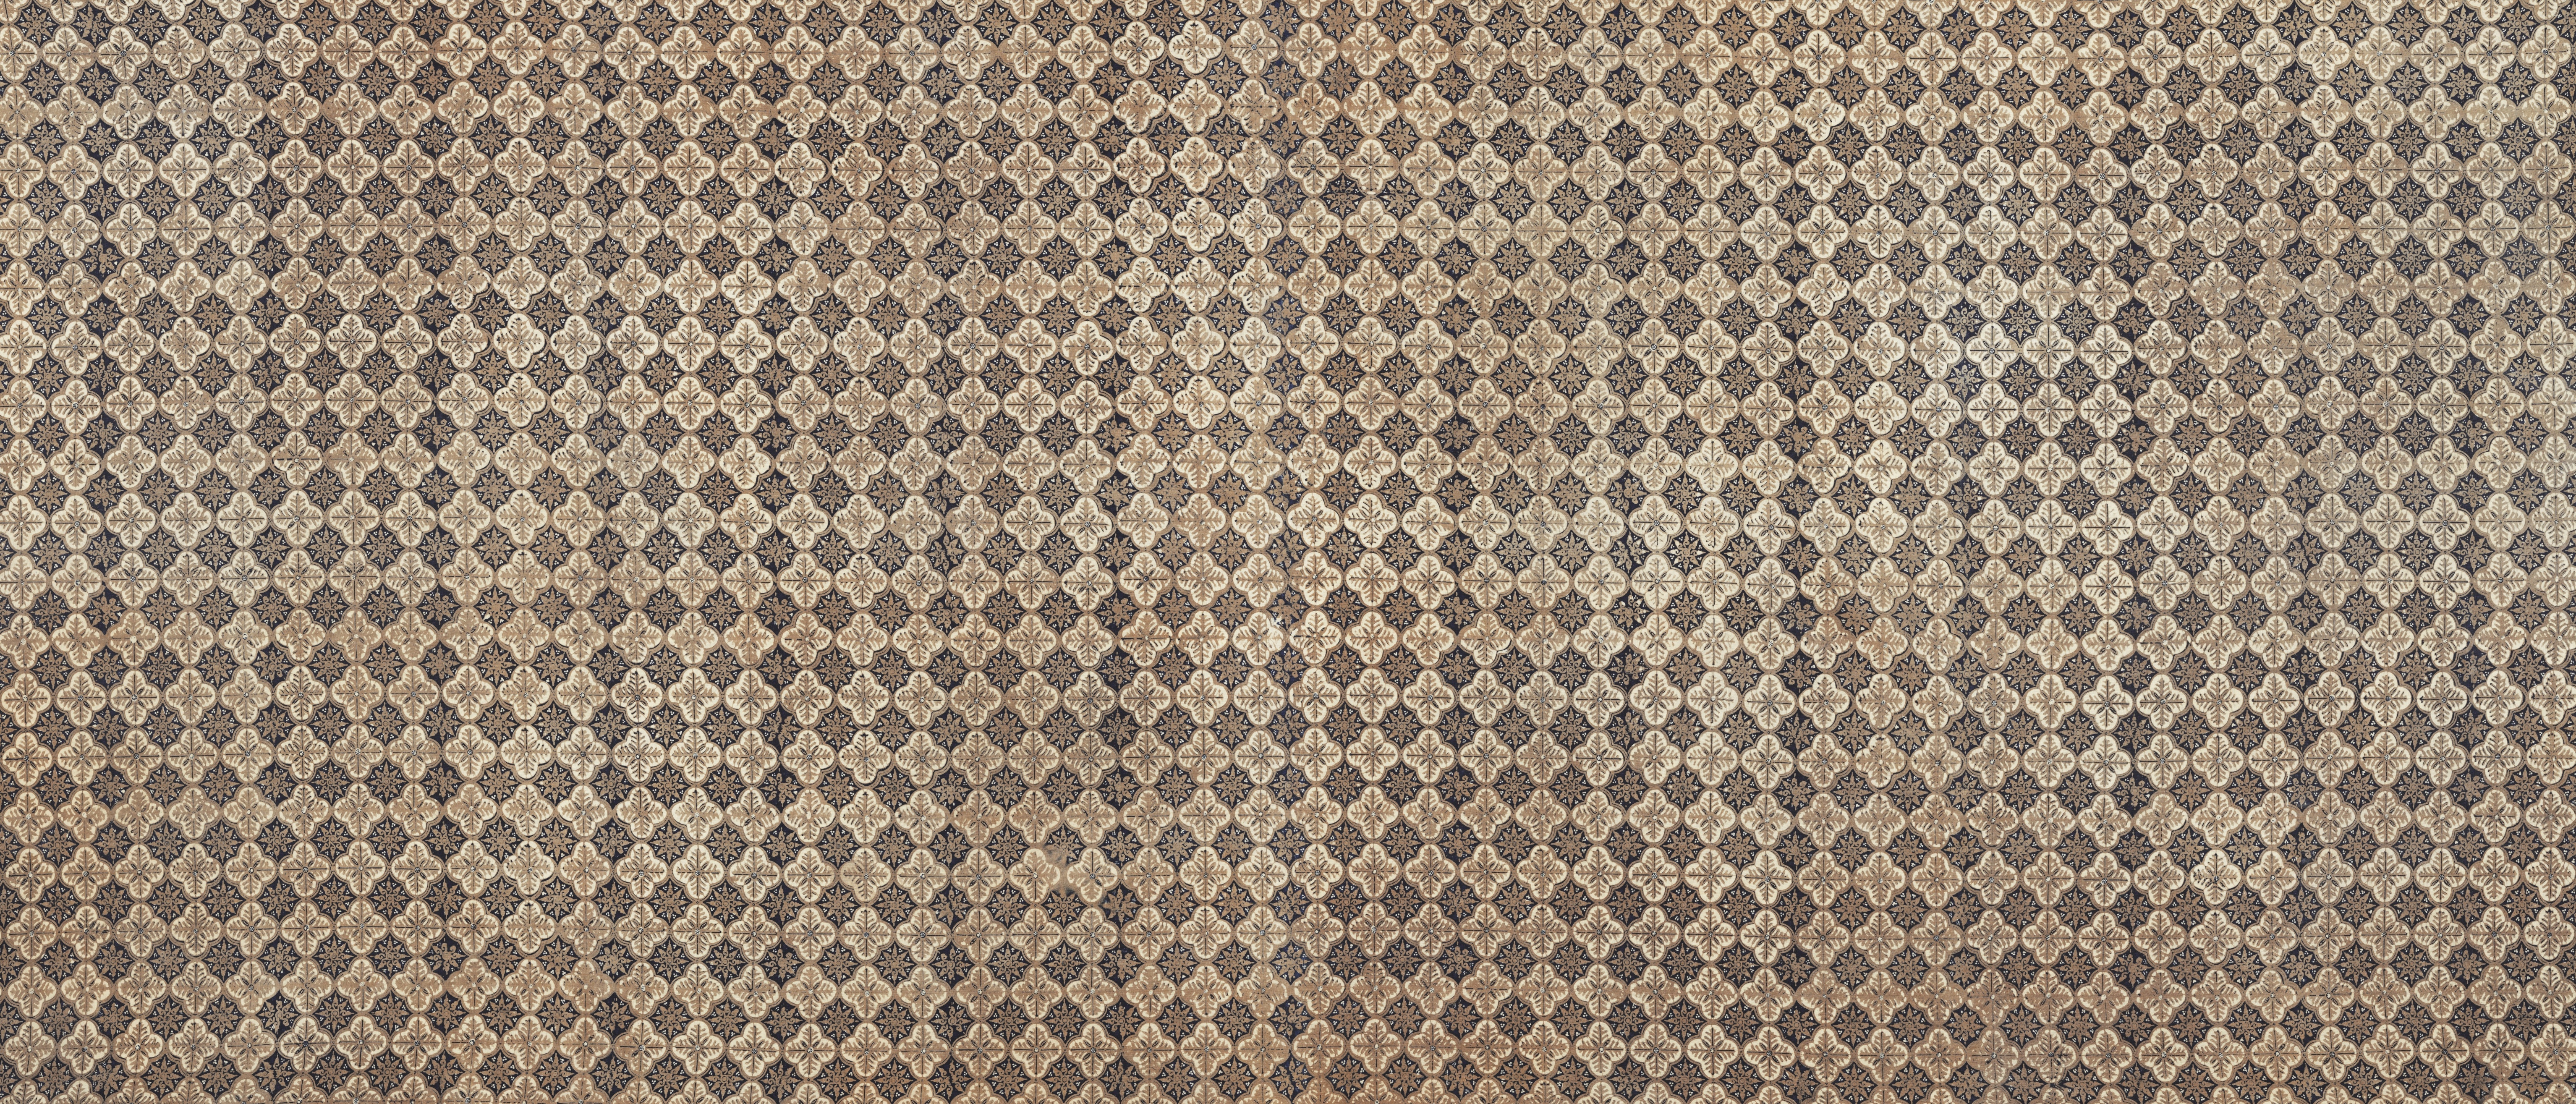 General 6137x2630 ultrawide fabric texture pattern symmetry